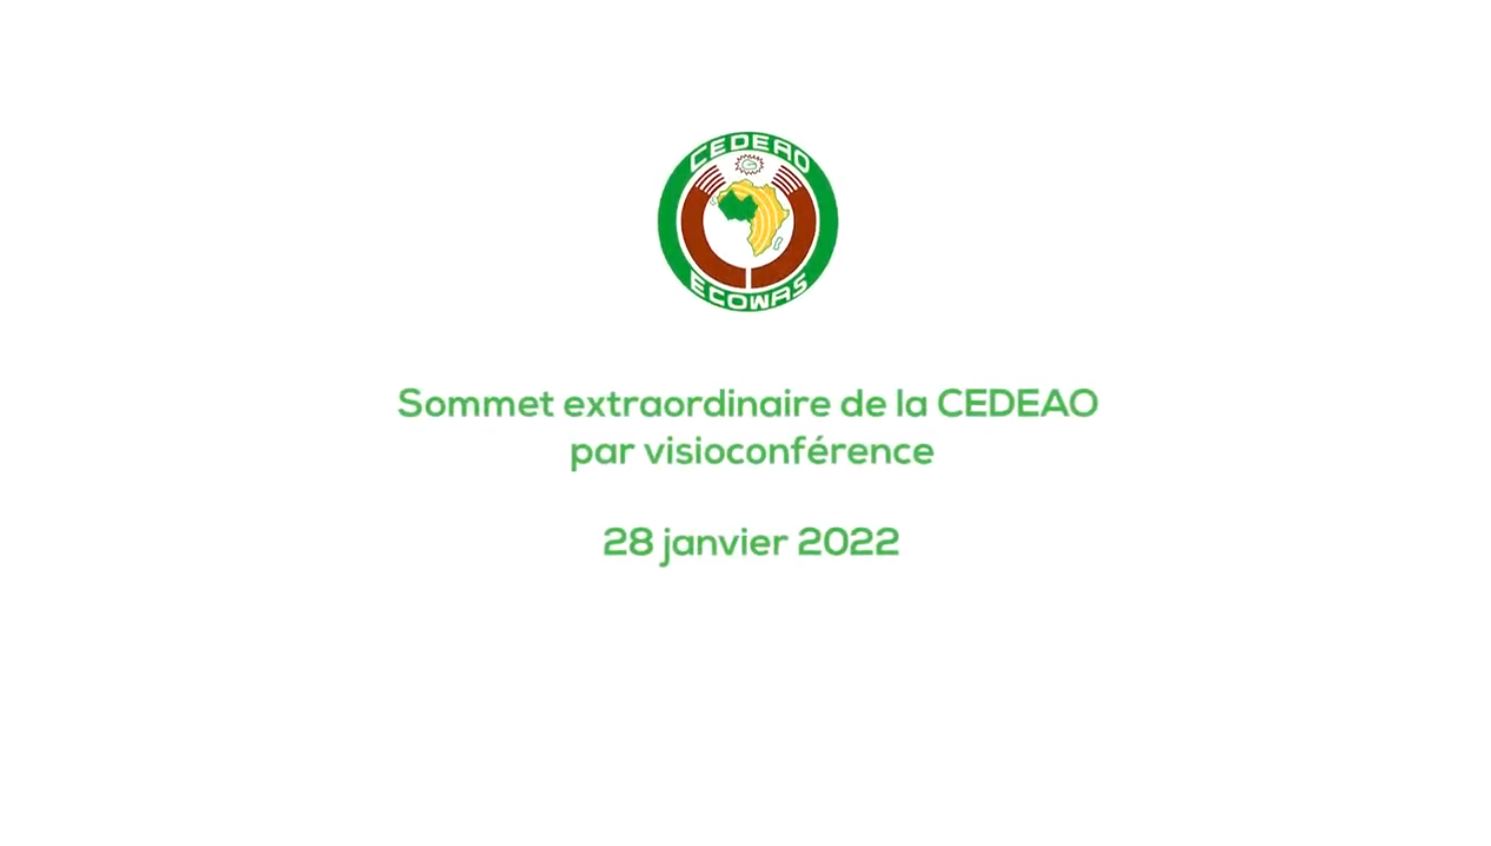 Crise_Burkina_Sommet_Extraordinaire_en_Visioconference_28012022_RCI_CIV_1